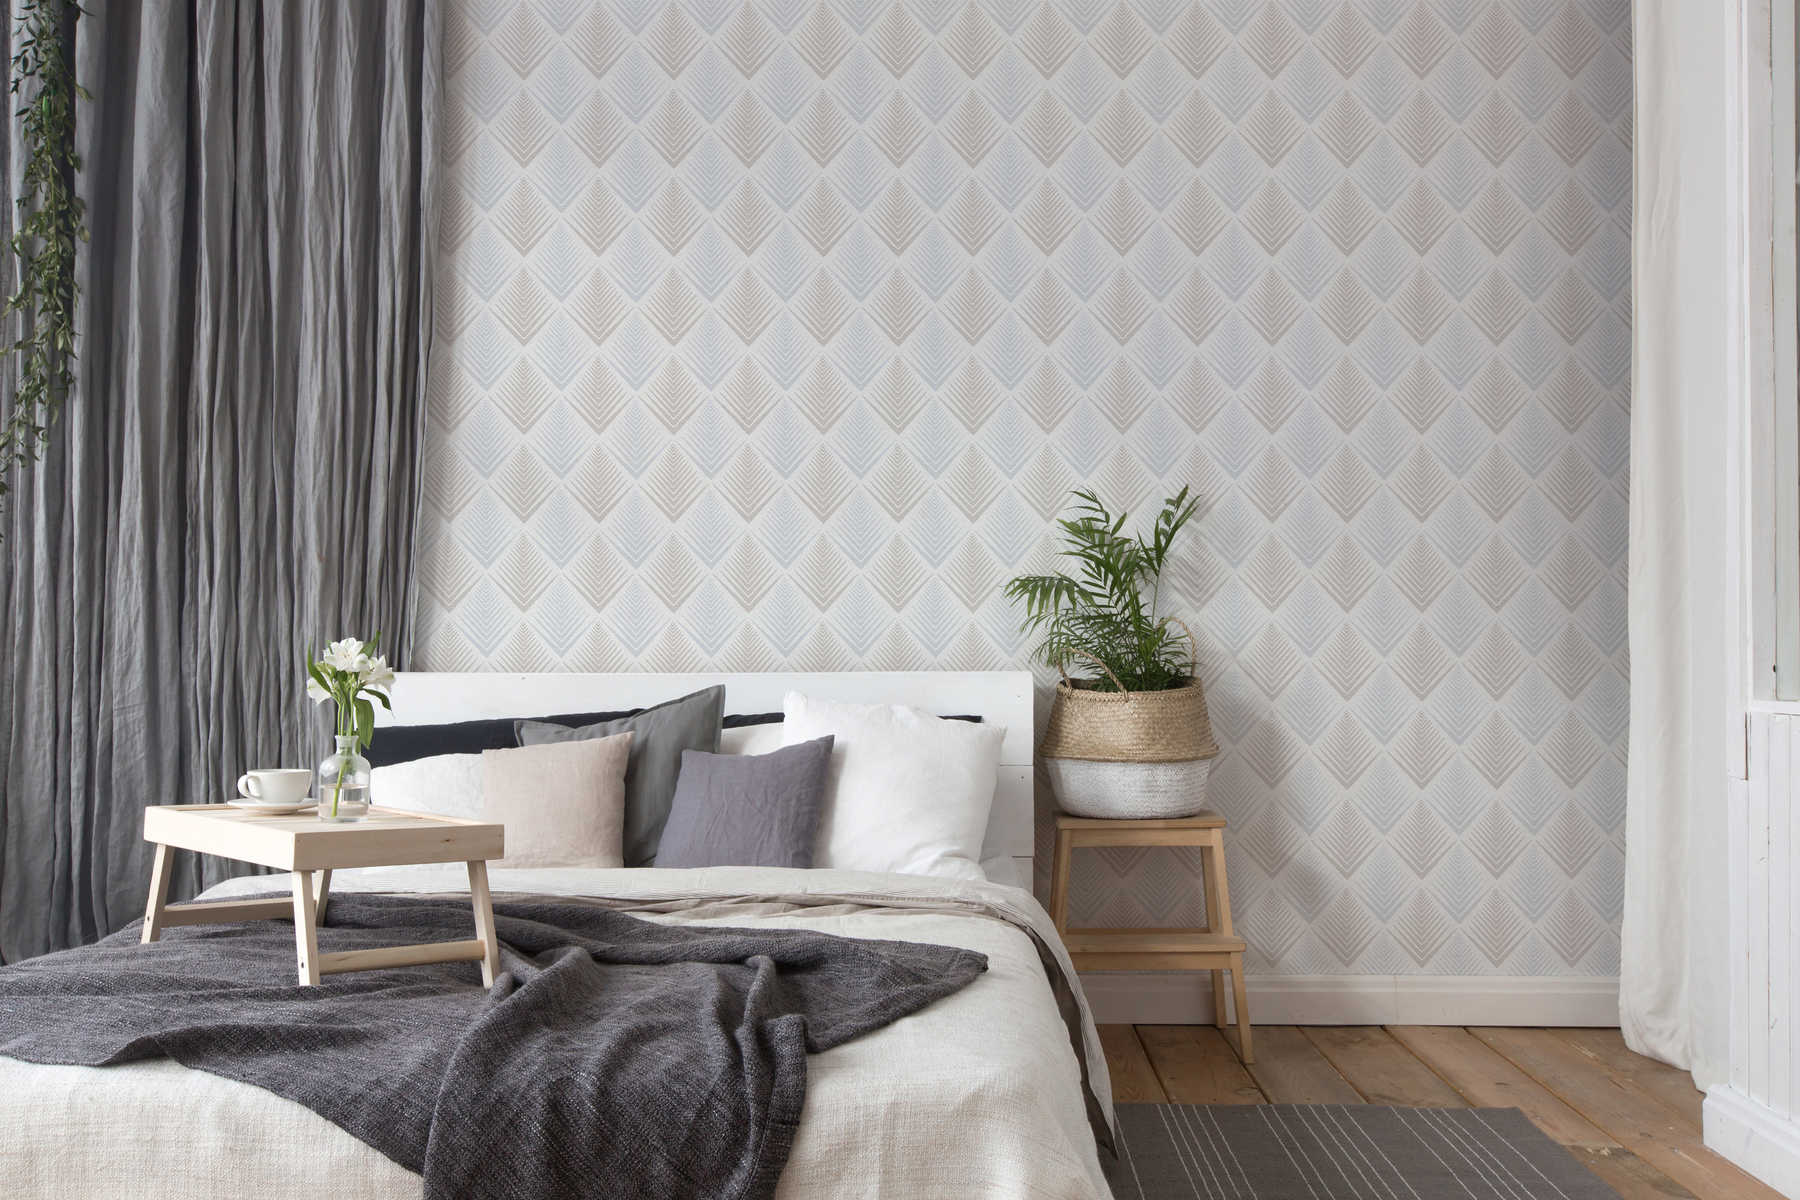             Scandinavian style retro wallpaper - blue, grey, cream
        